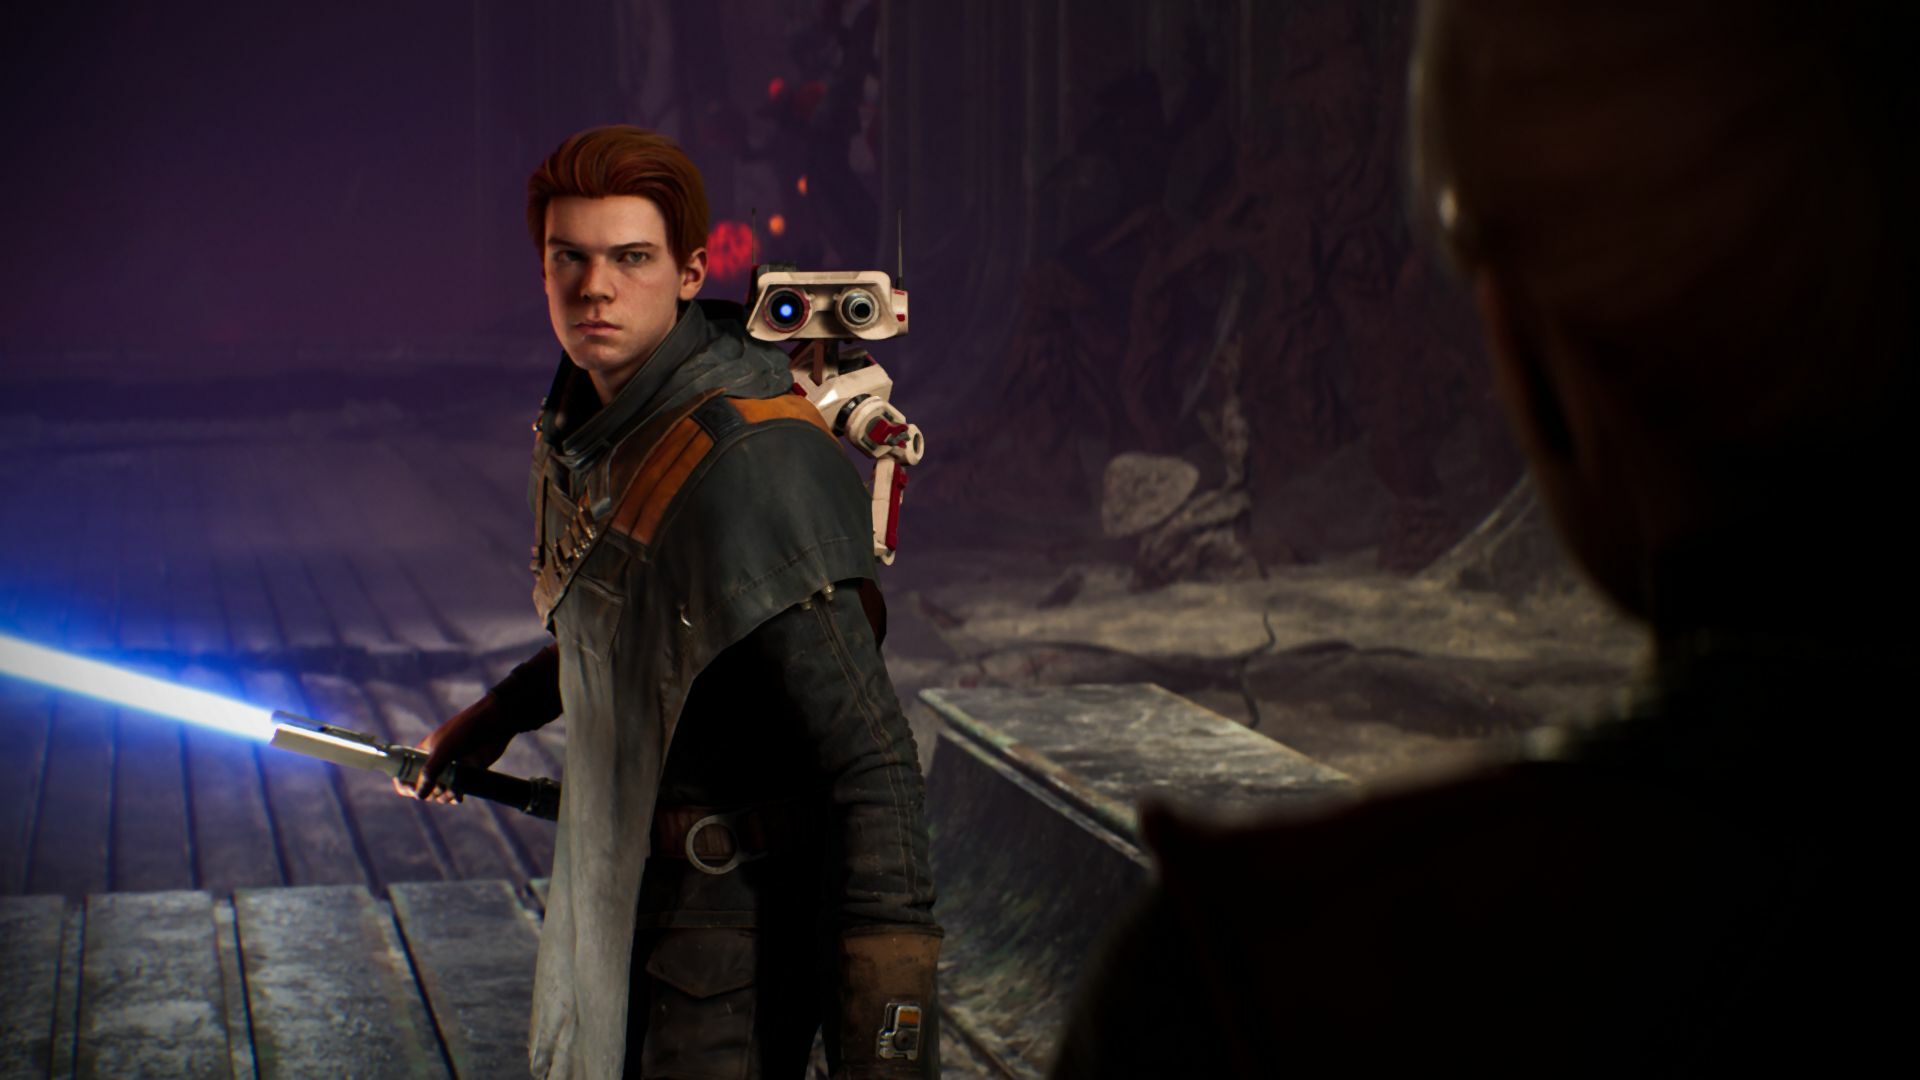 A screenshot from the game "Star Wars Jedi: Fallen Order."